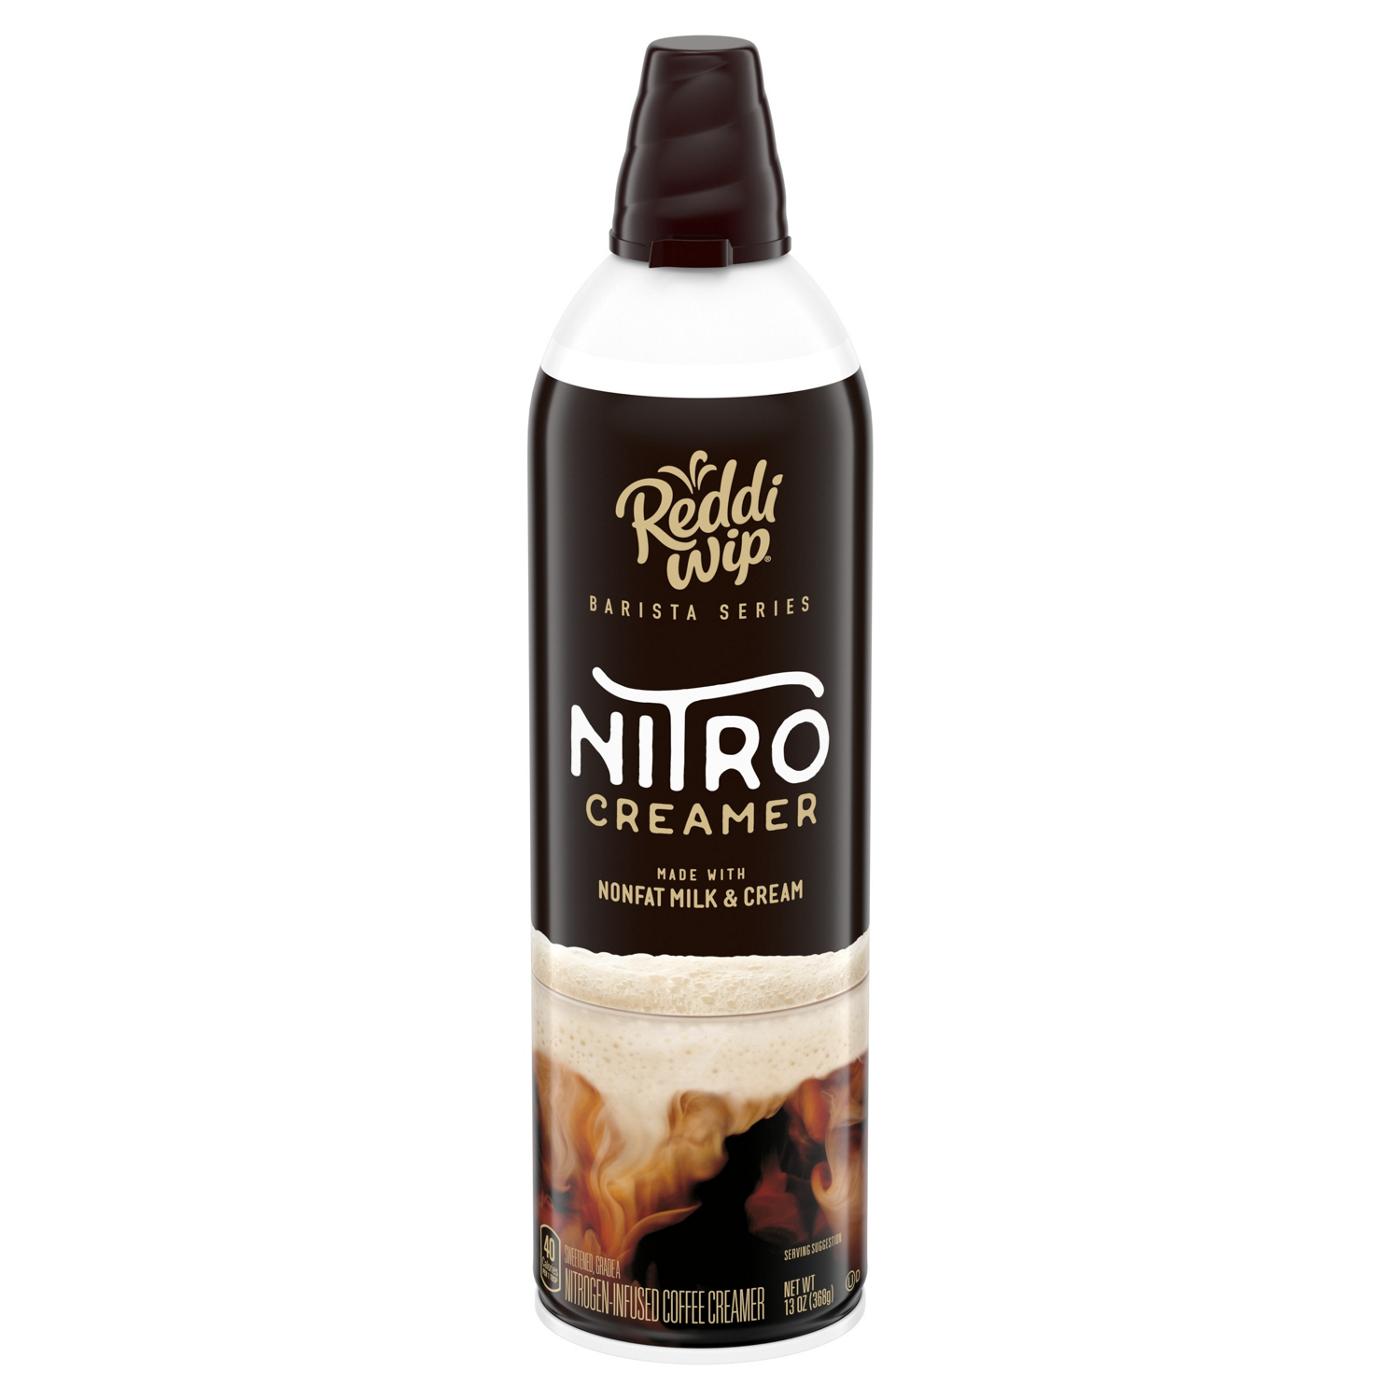 Reddi Wip Barista Series Nitro Coffee Creamer Topper Made with Nonfat Milk and Cream; image 1 of 7